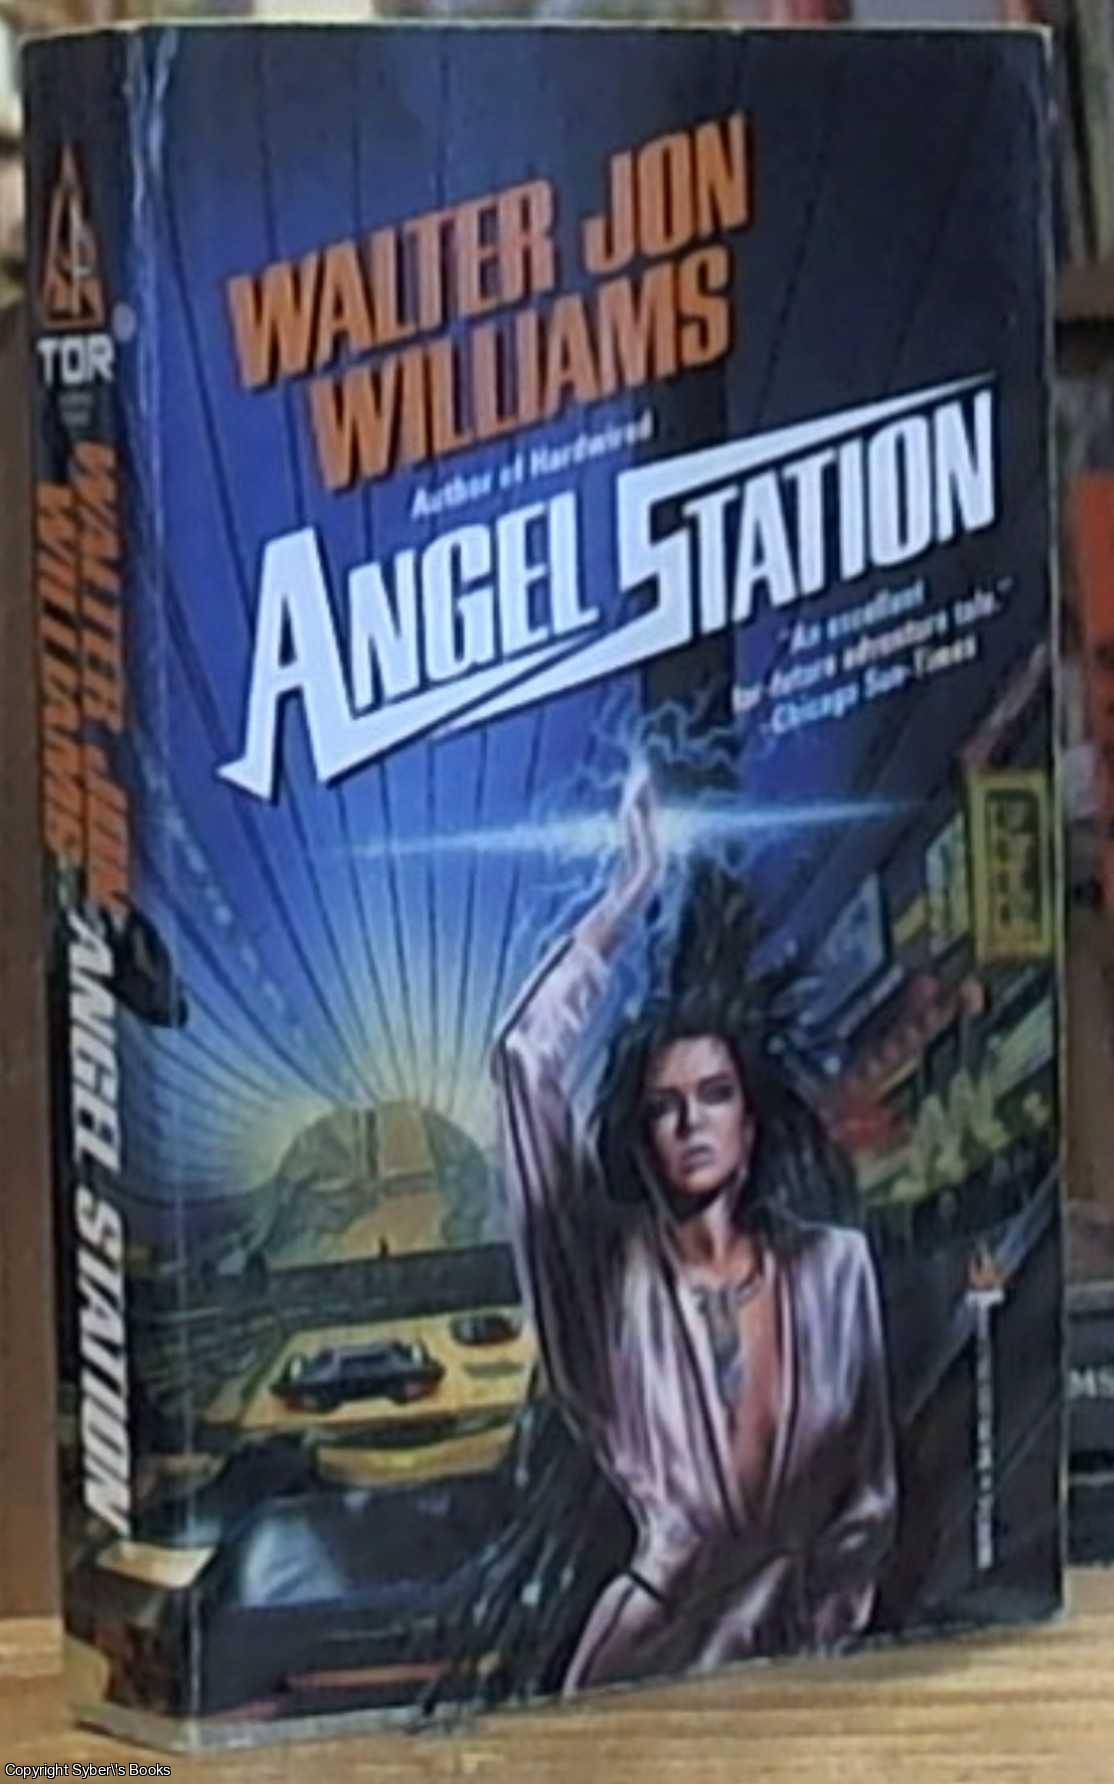 Williams, Walter Jon - Angel Station